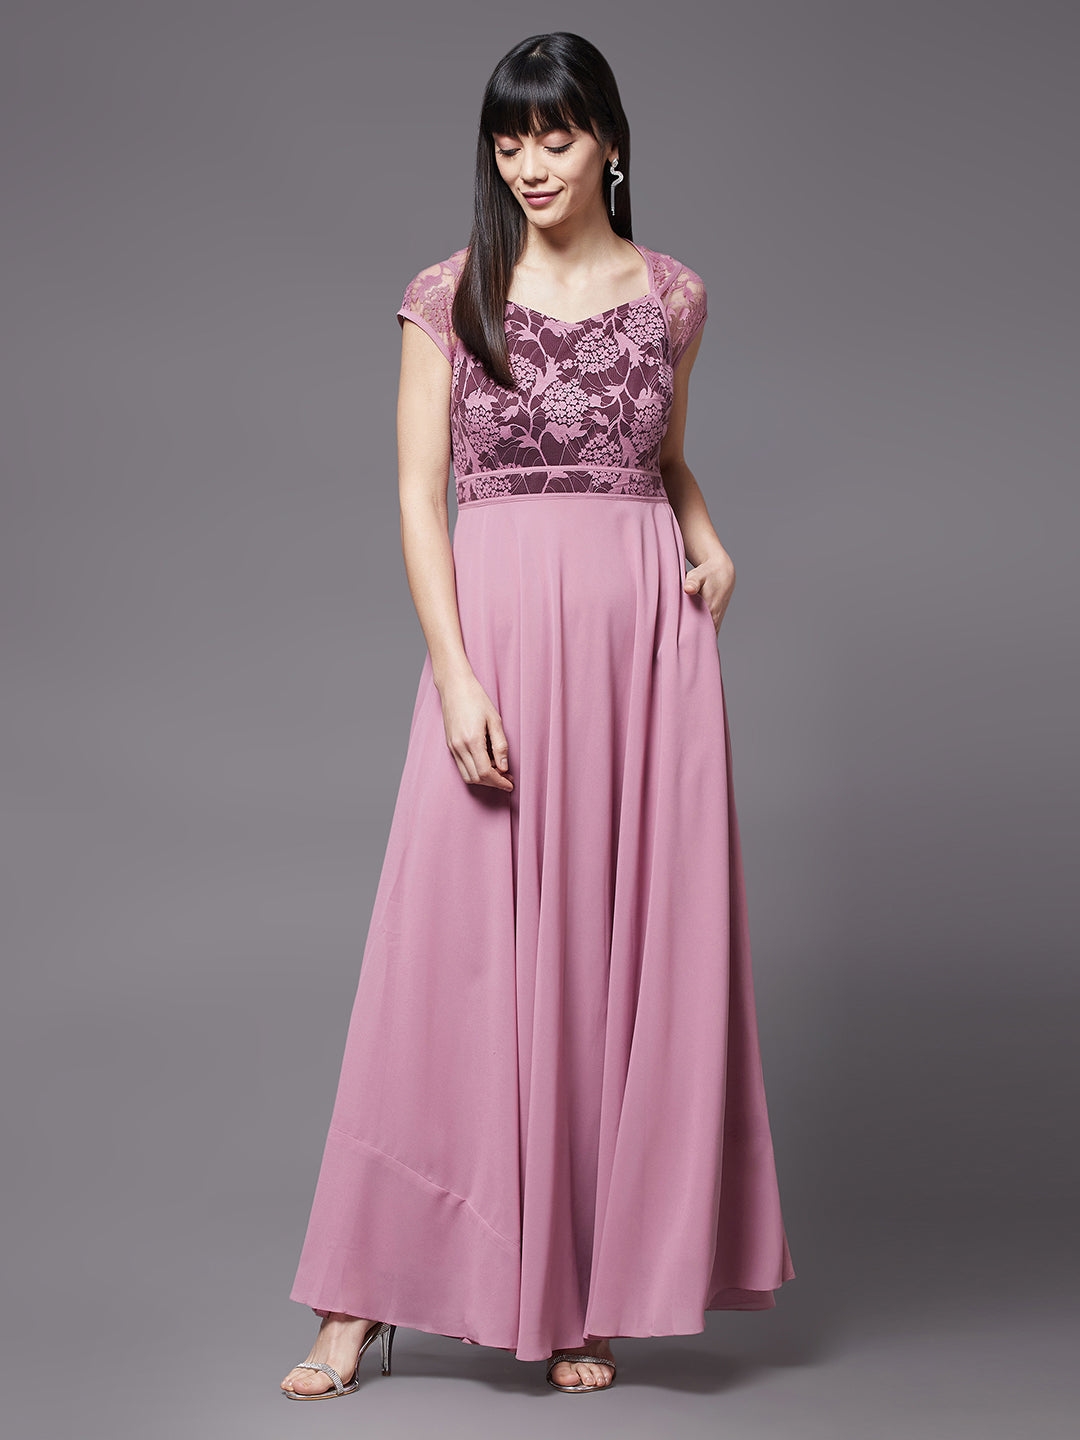 Lavender & Wine V-Neck Cap Sleeves Floral Lace Fit & Flare Maxi Dress